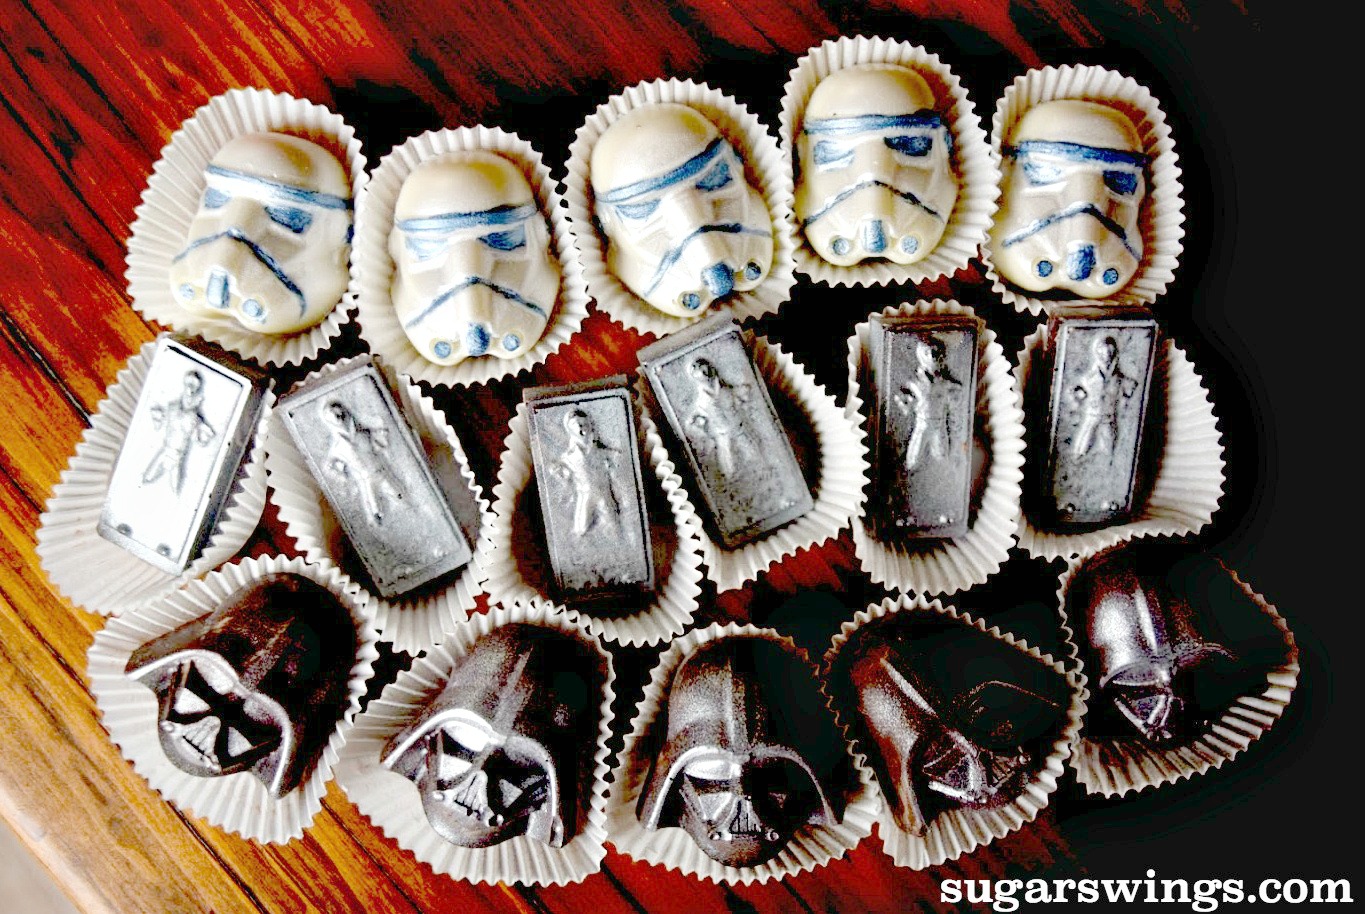 Star Wars mold Darth Vader ice cubes - chocolates